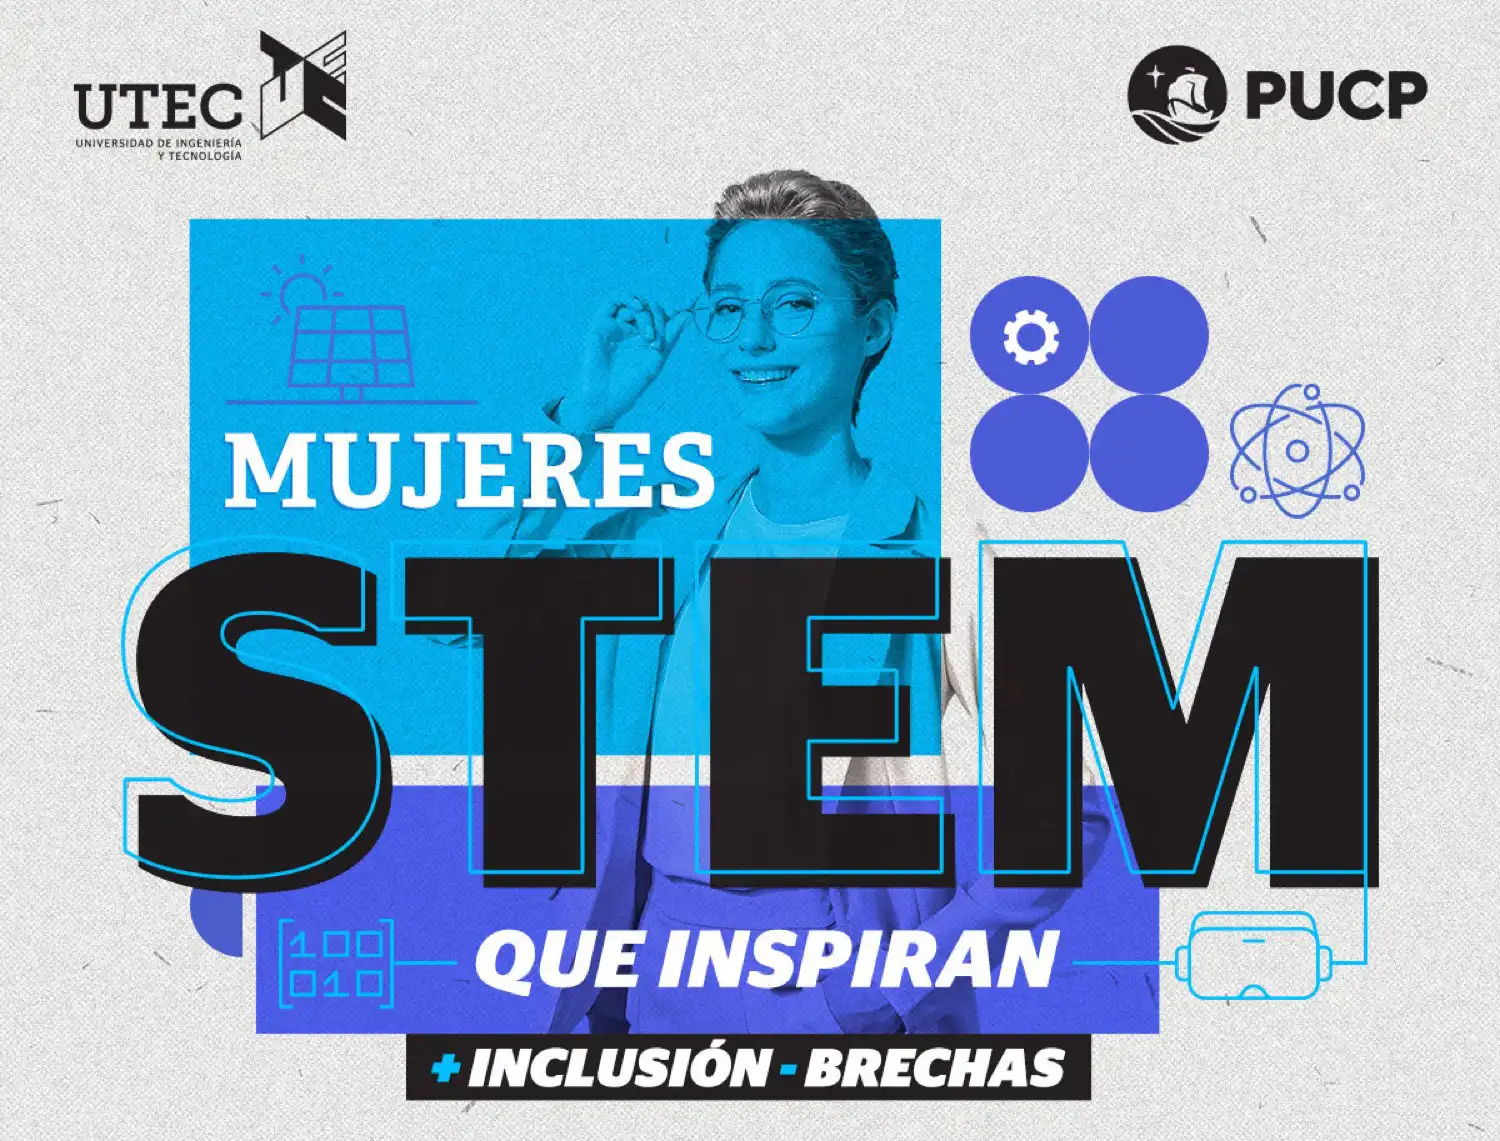 Universidades peruanas impulsan carreras STEM en mujeres